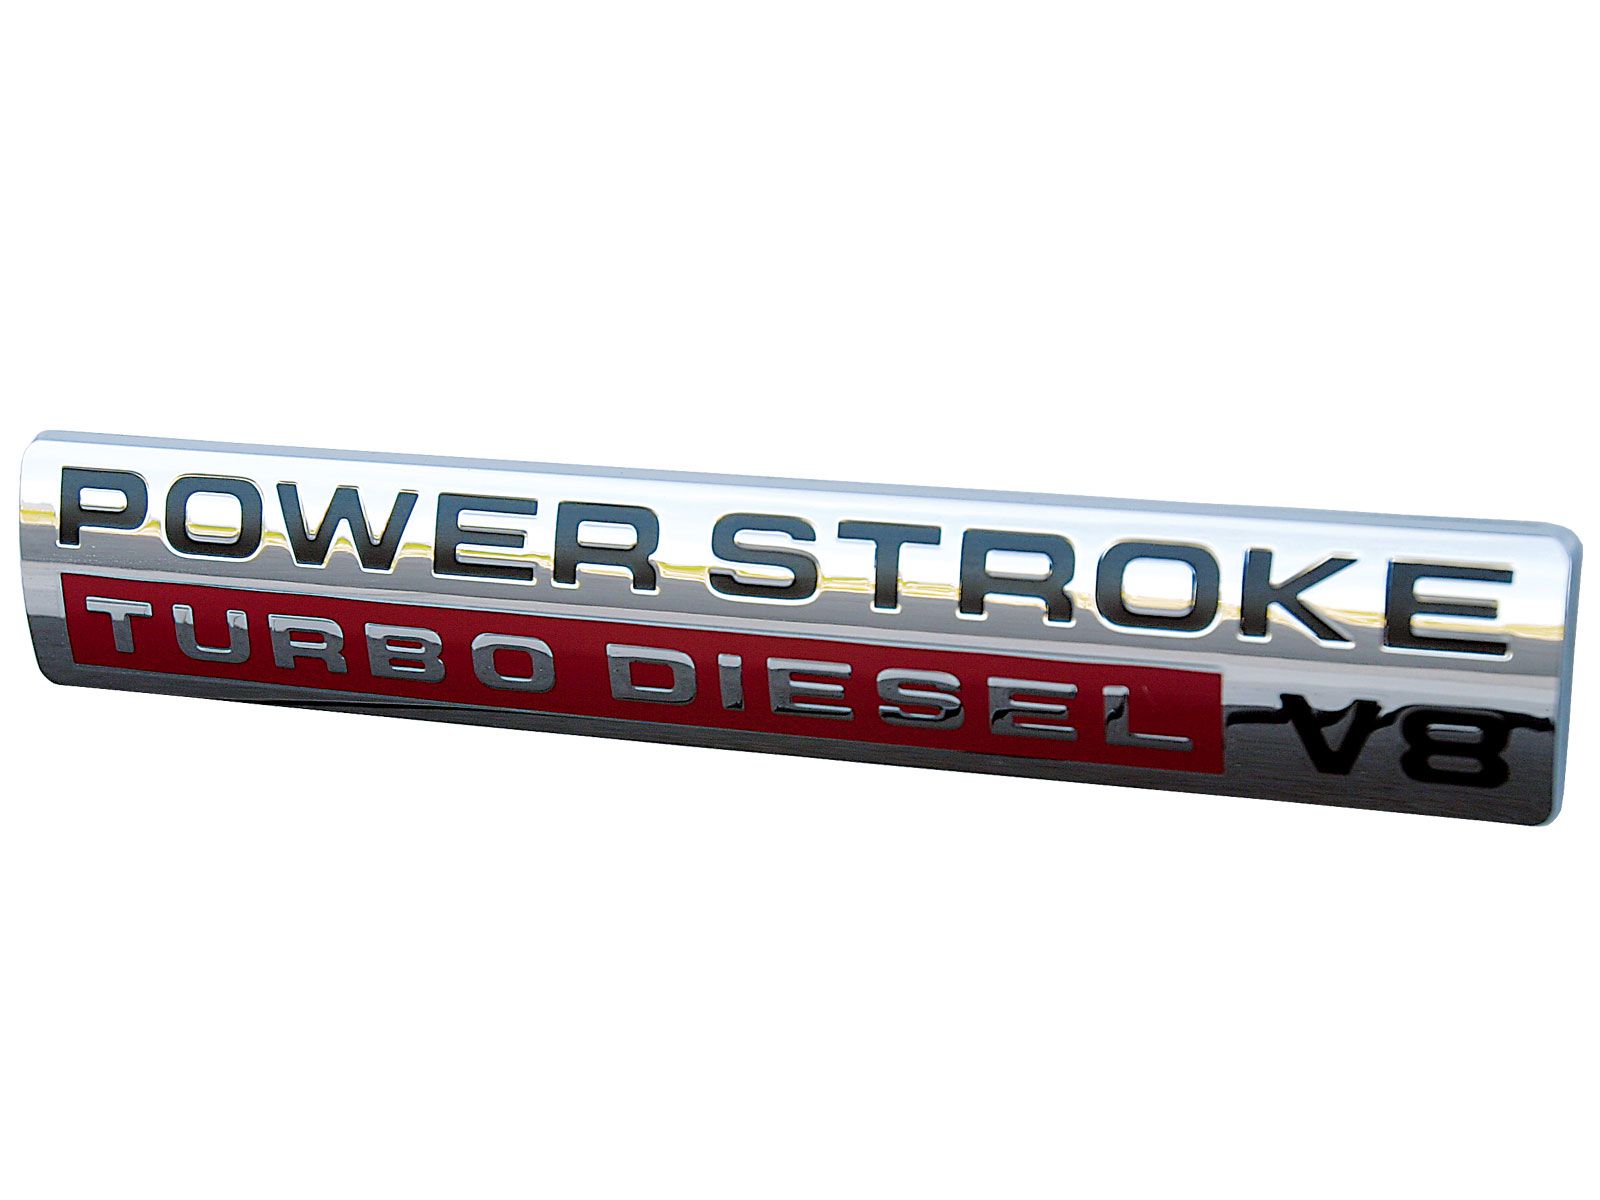 Cool Ford Powerstroke Logos, image #258. 